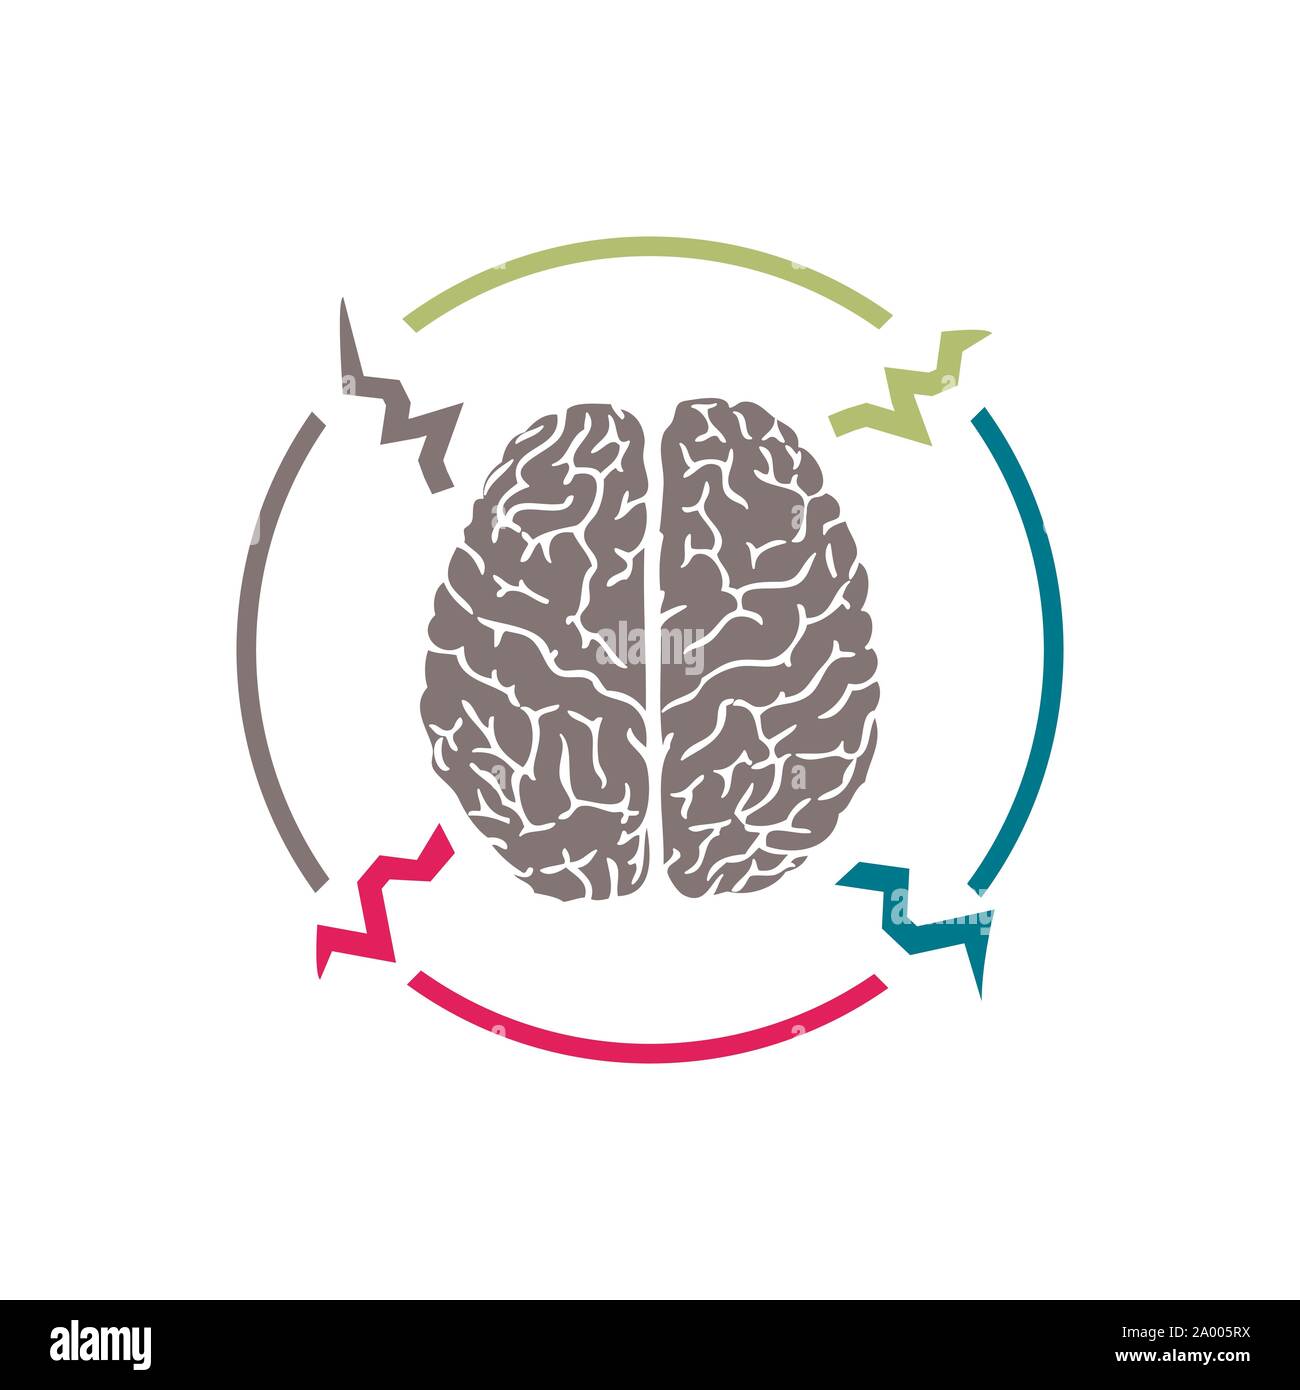 Schock Gehirn Logo denke Idee Konzept Brainstorm power Silhouette design vector Template Stock Vektor